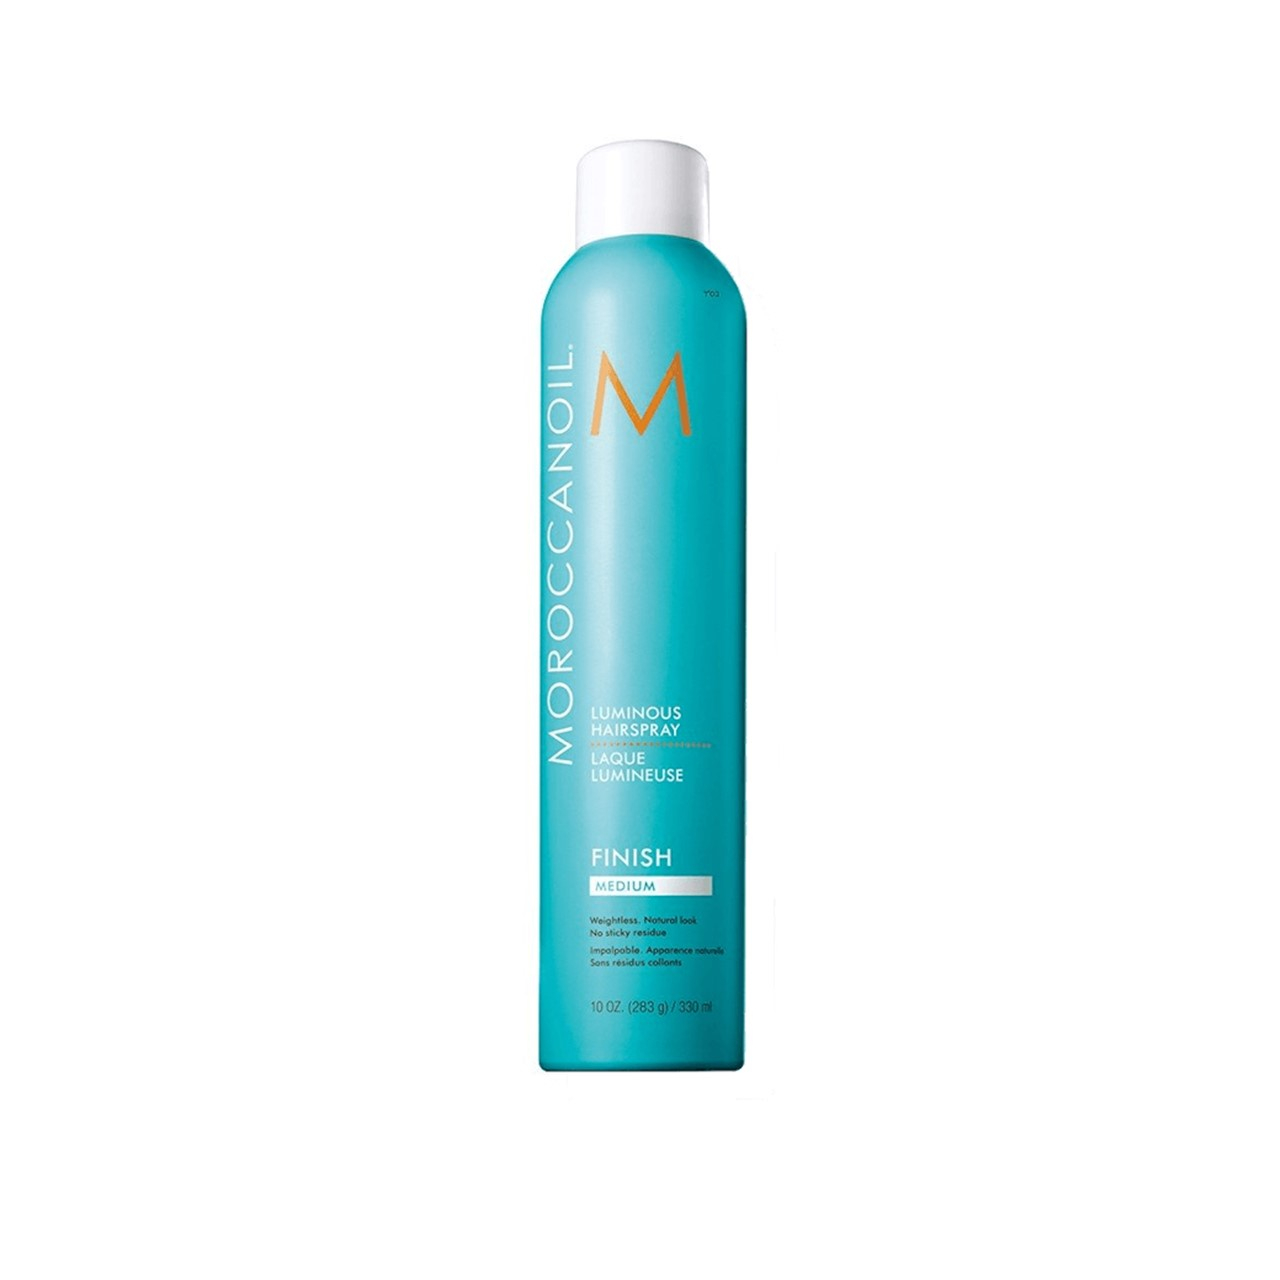 Moroccanoil Finish Luminous Hairspray Medium 330ml (11.16fl oz)